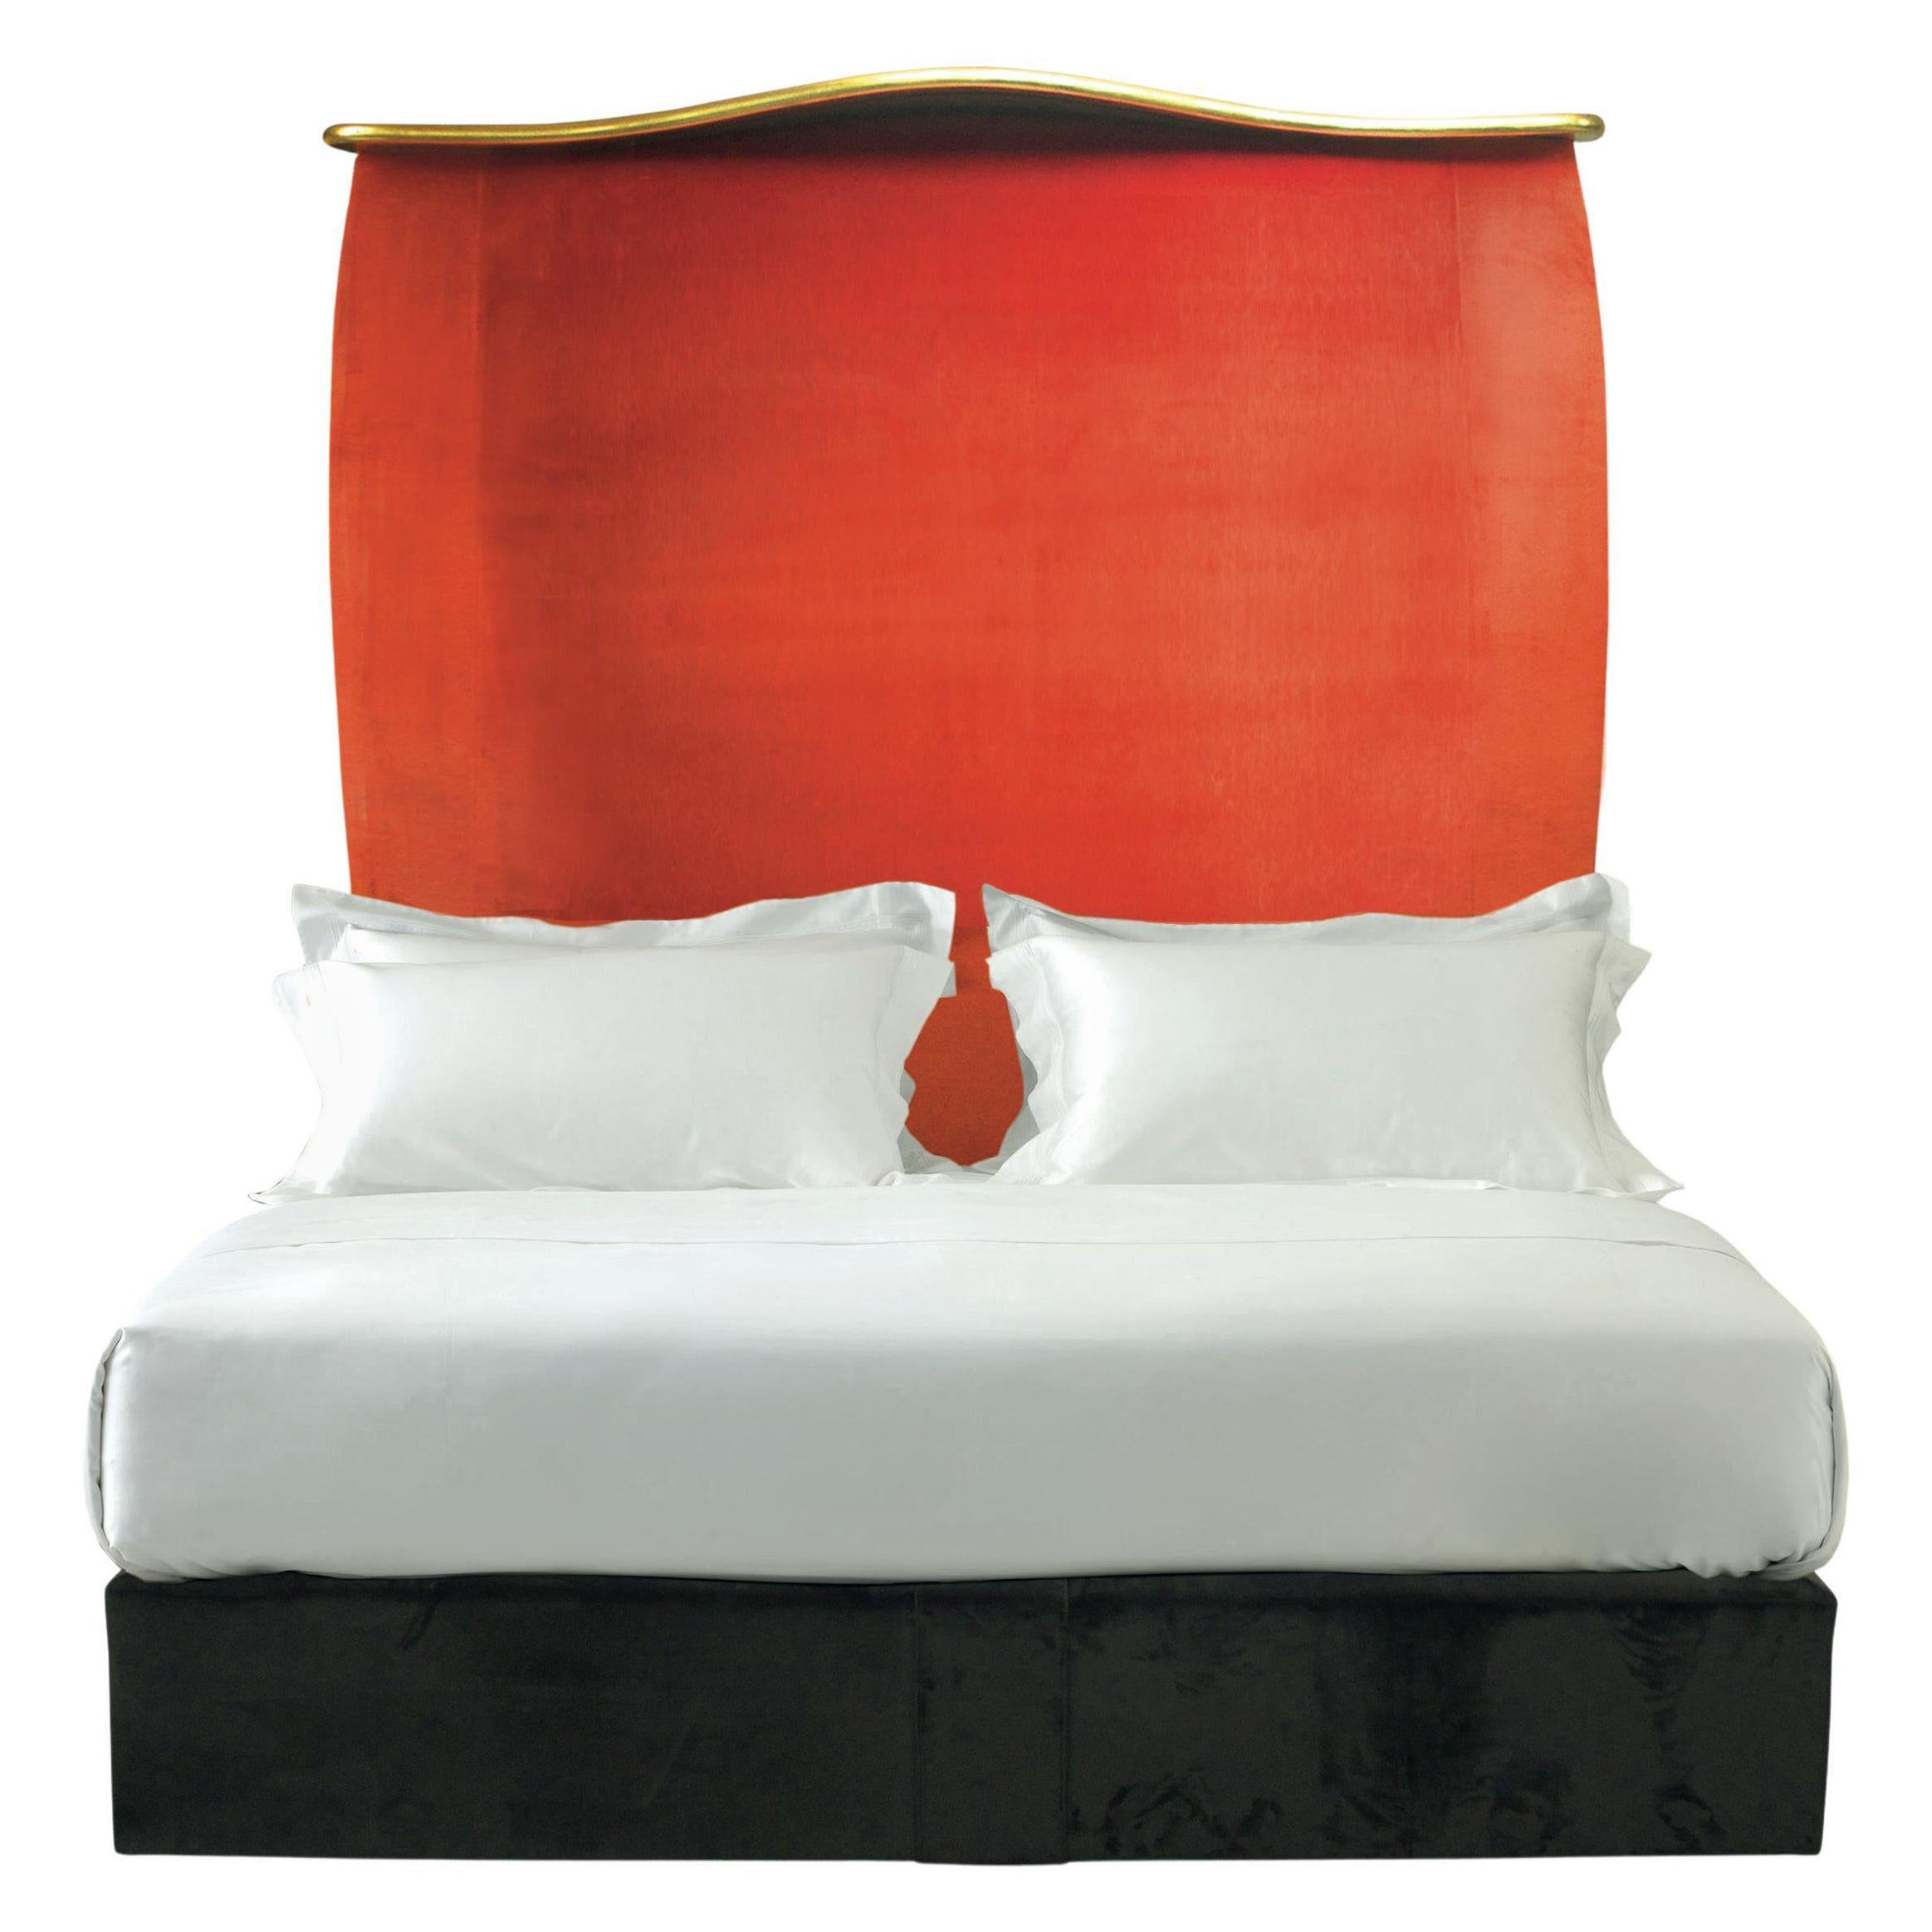 Bespoke Savoir Nicky & Nº4 Bed Set, Eastern King Size, by Nicky Haslam